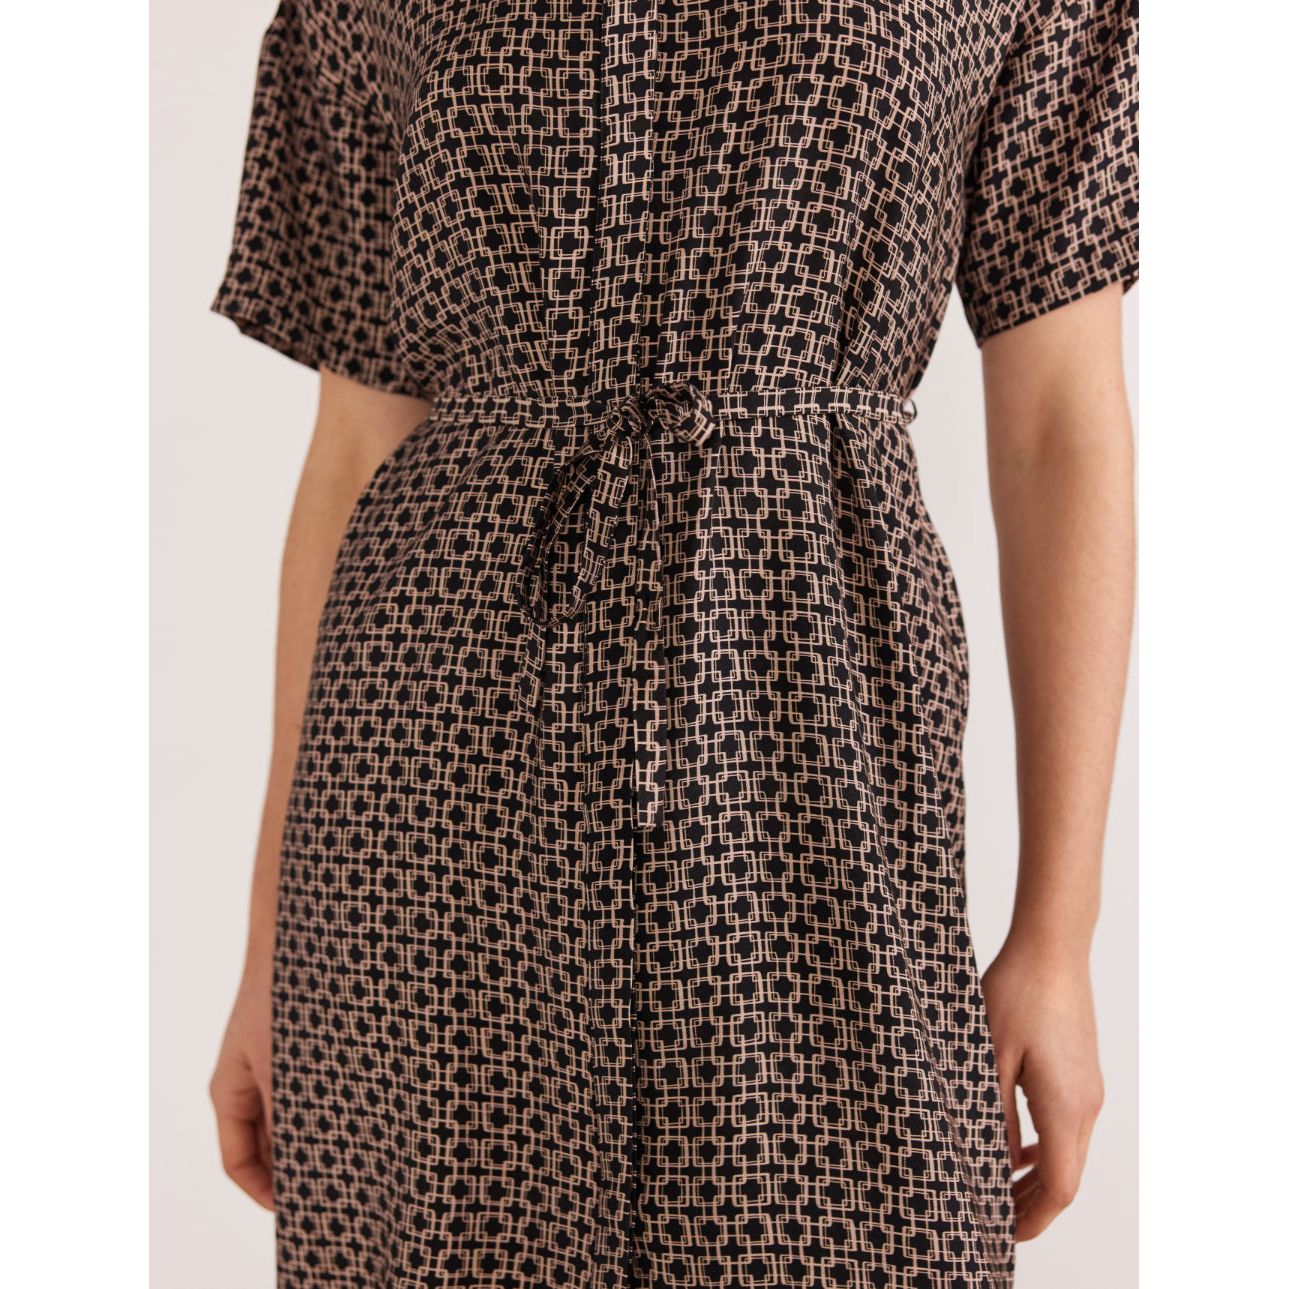 Lexi Midi Shirt Dress - Geometric